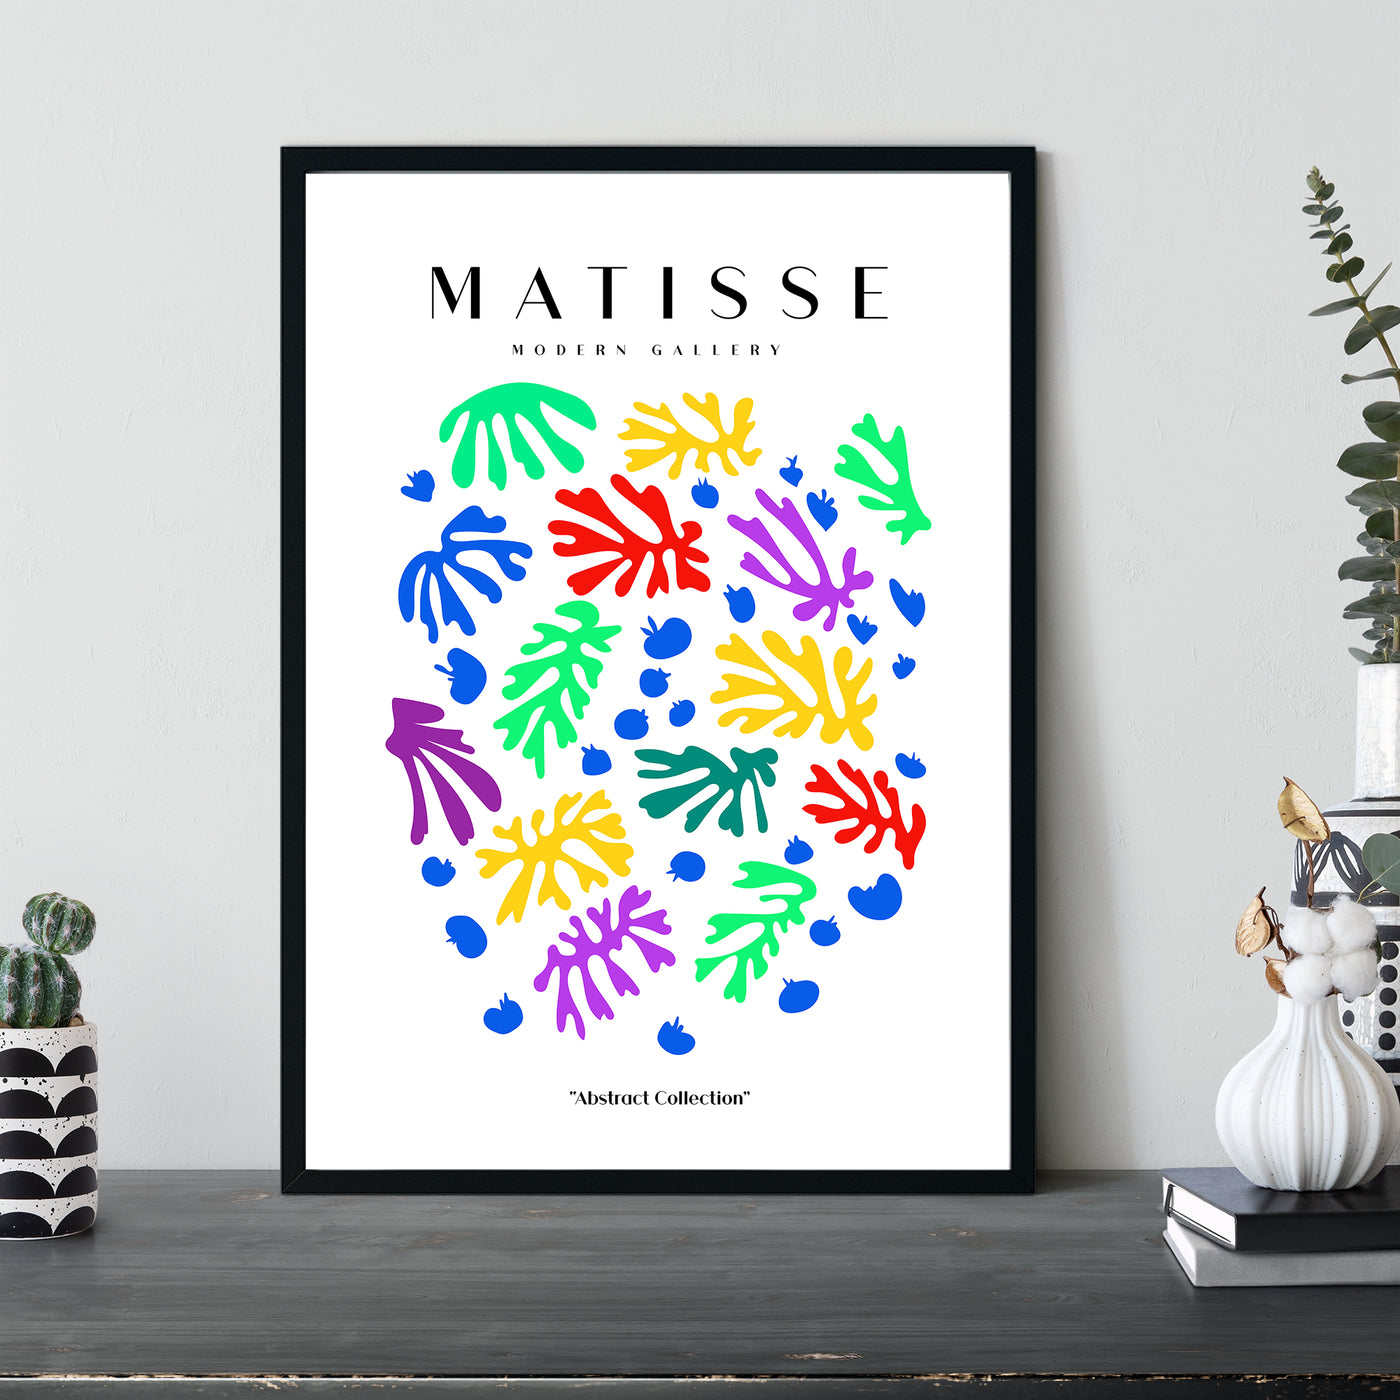 Henri Matisse - #50